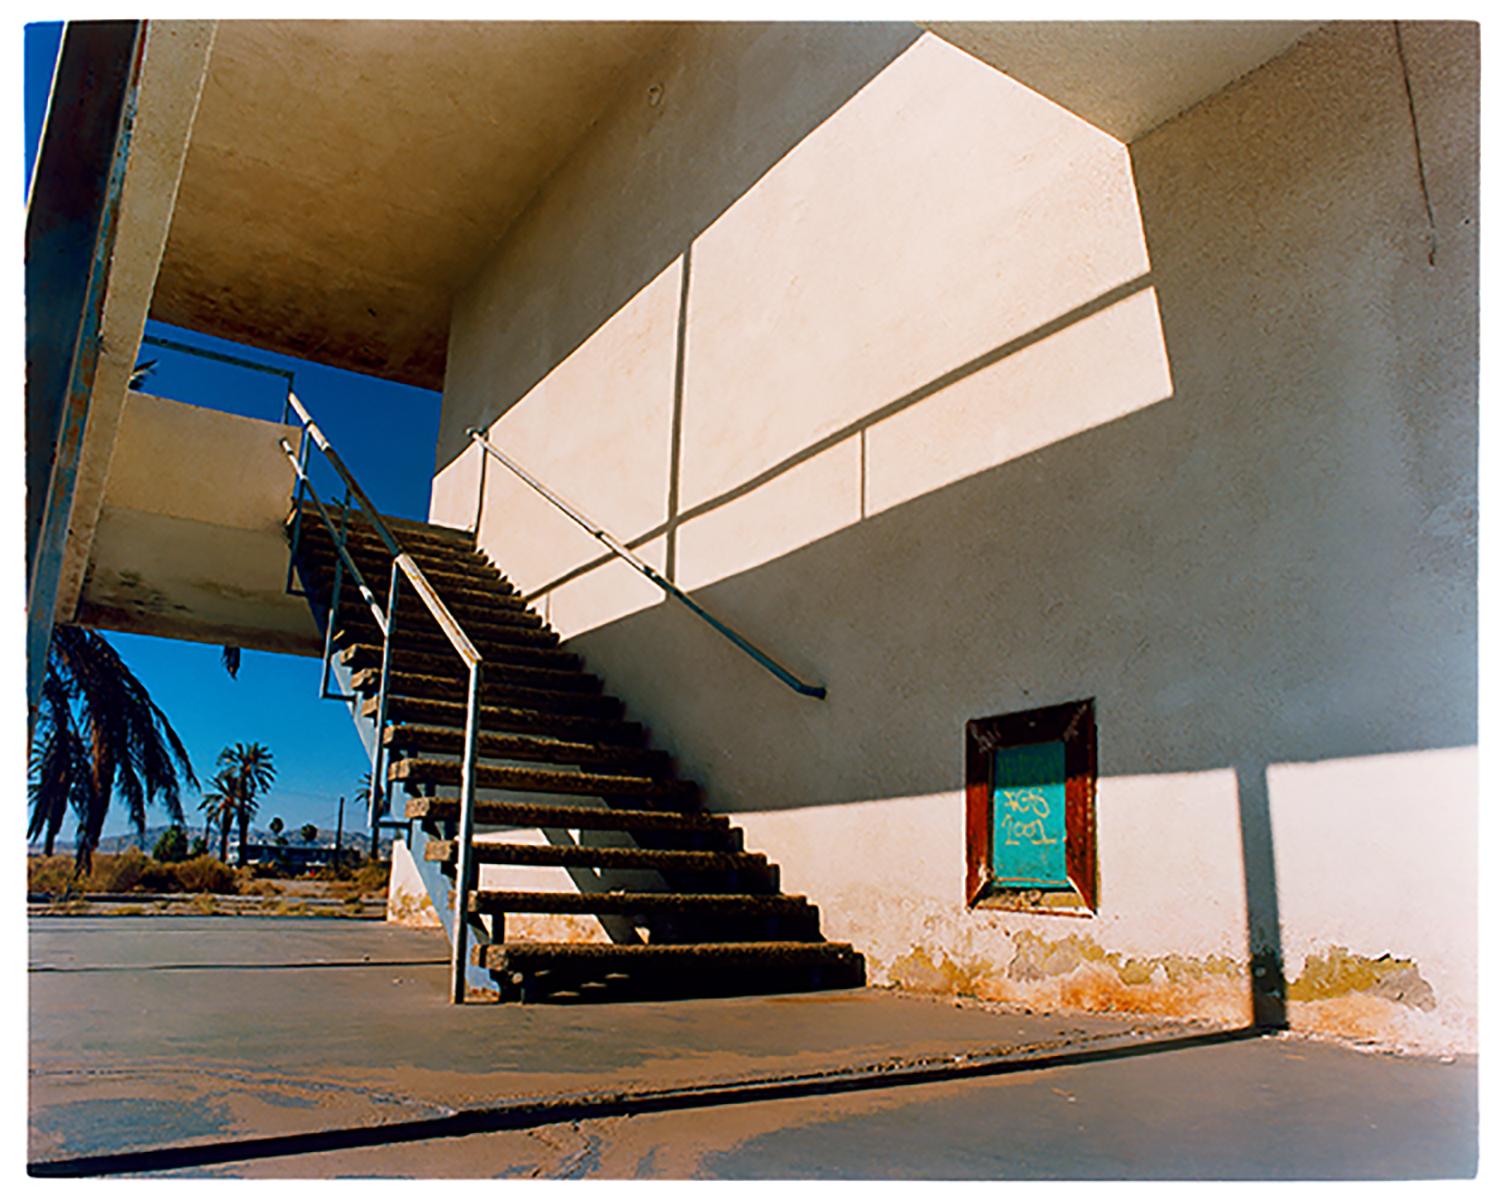 Richard Heeps Print - North Shore Motel Steps, Salton Sea, California - Architectural color photo